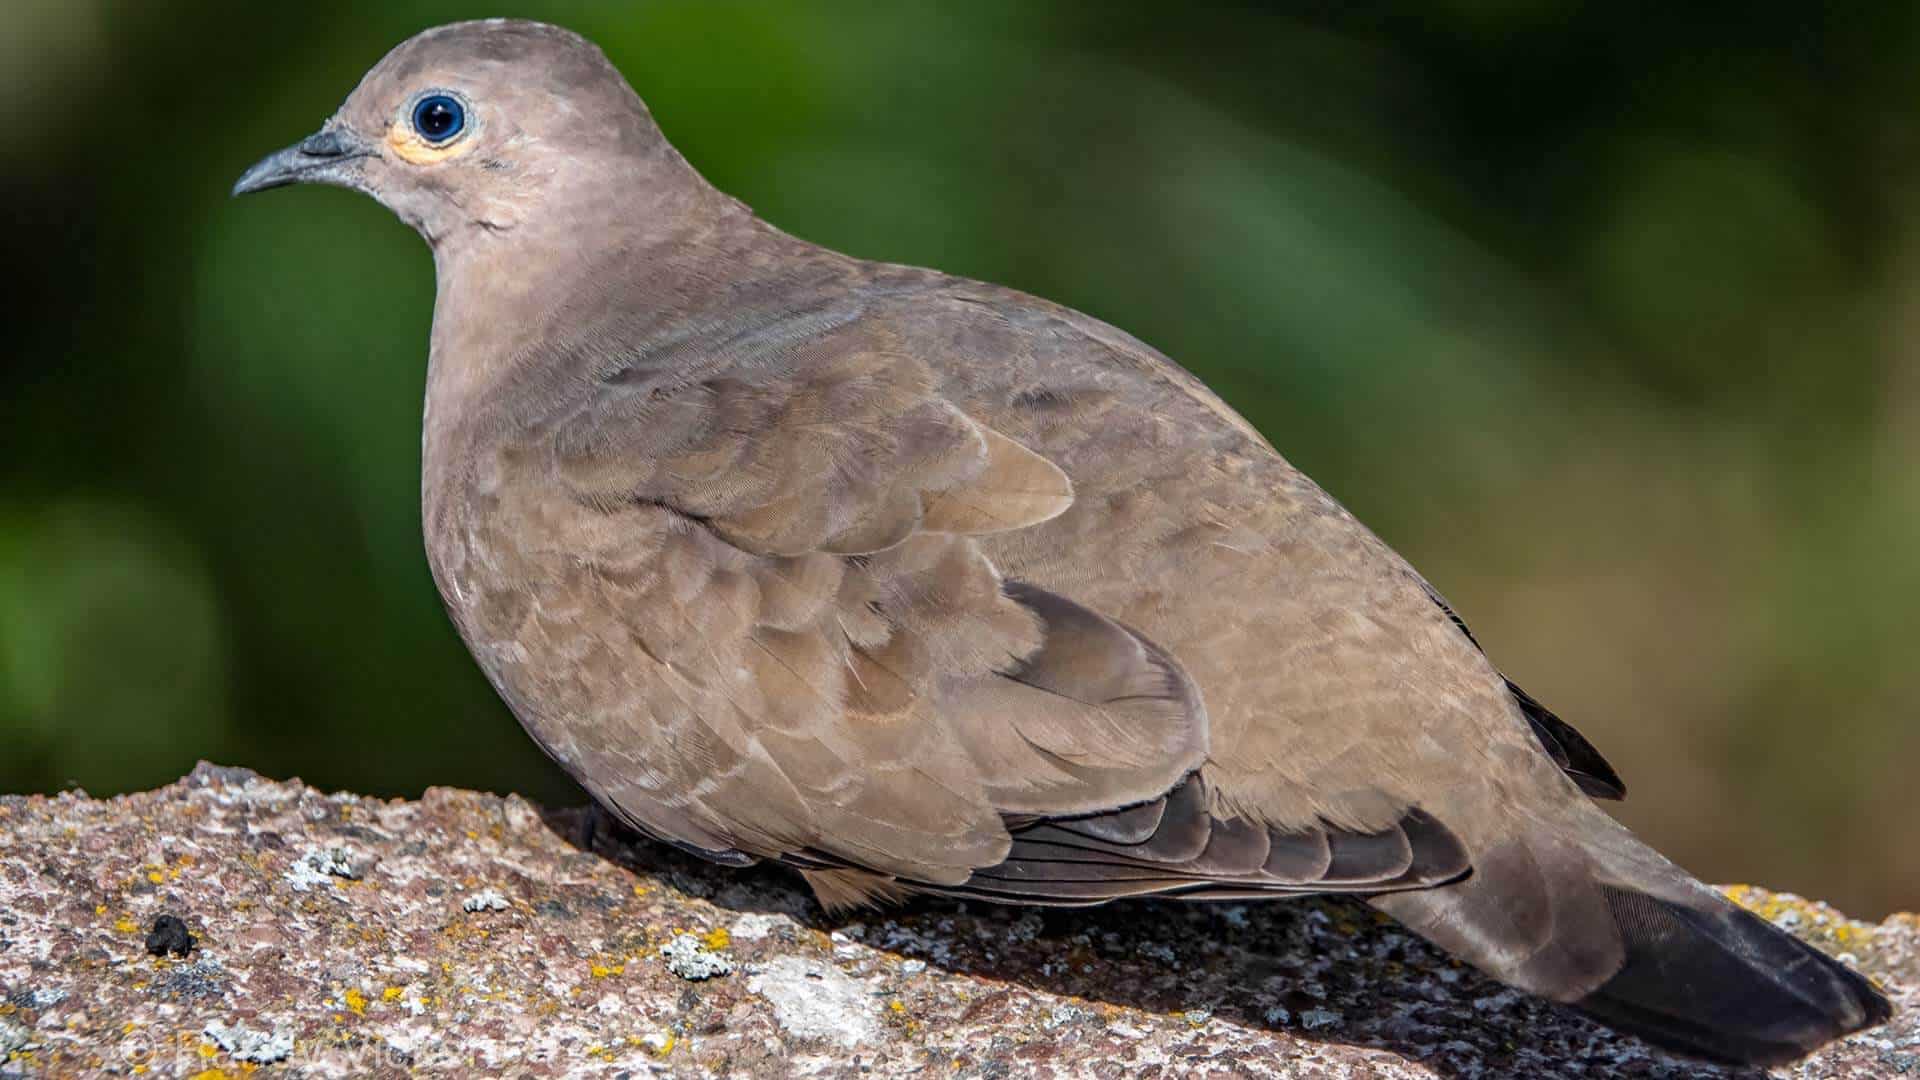 Antisana Reserve Taube auf Ecuador Vogelbeobachtungstour entdeckt